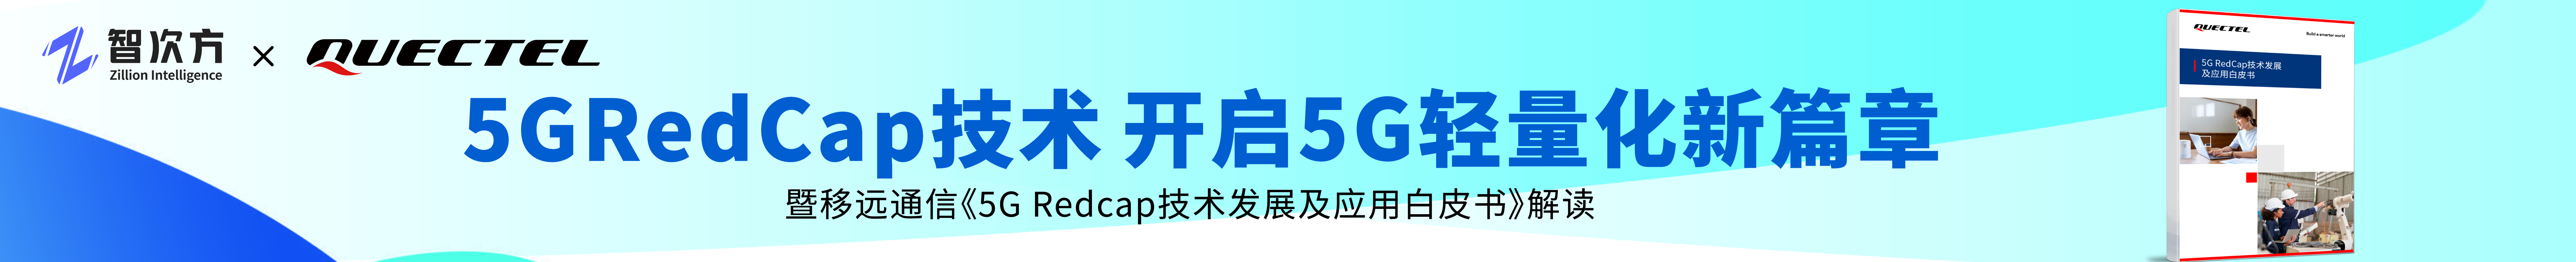 5G RedCap技术，开启5G轻量化新篇章 暨移远通信《5G RedCap技术发展及应用白皮书》解读